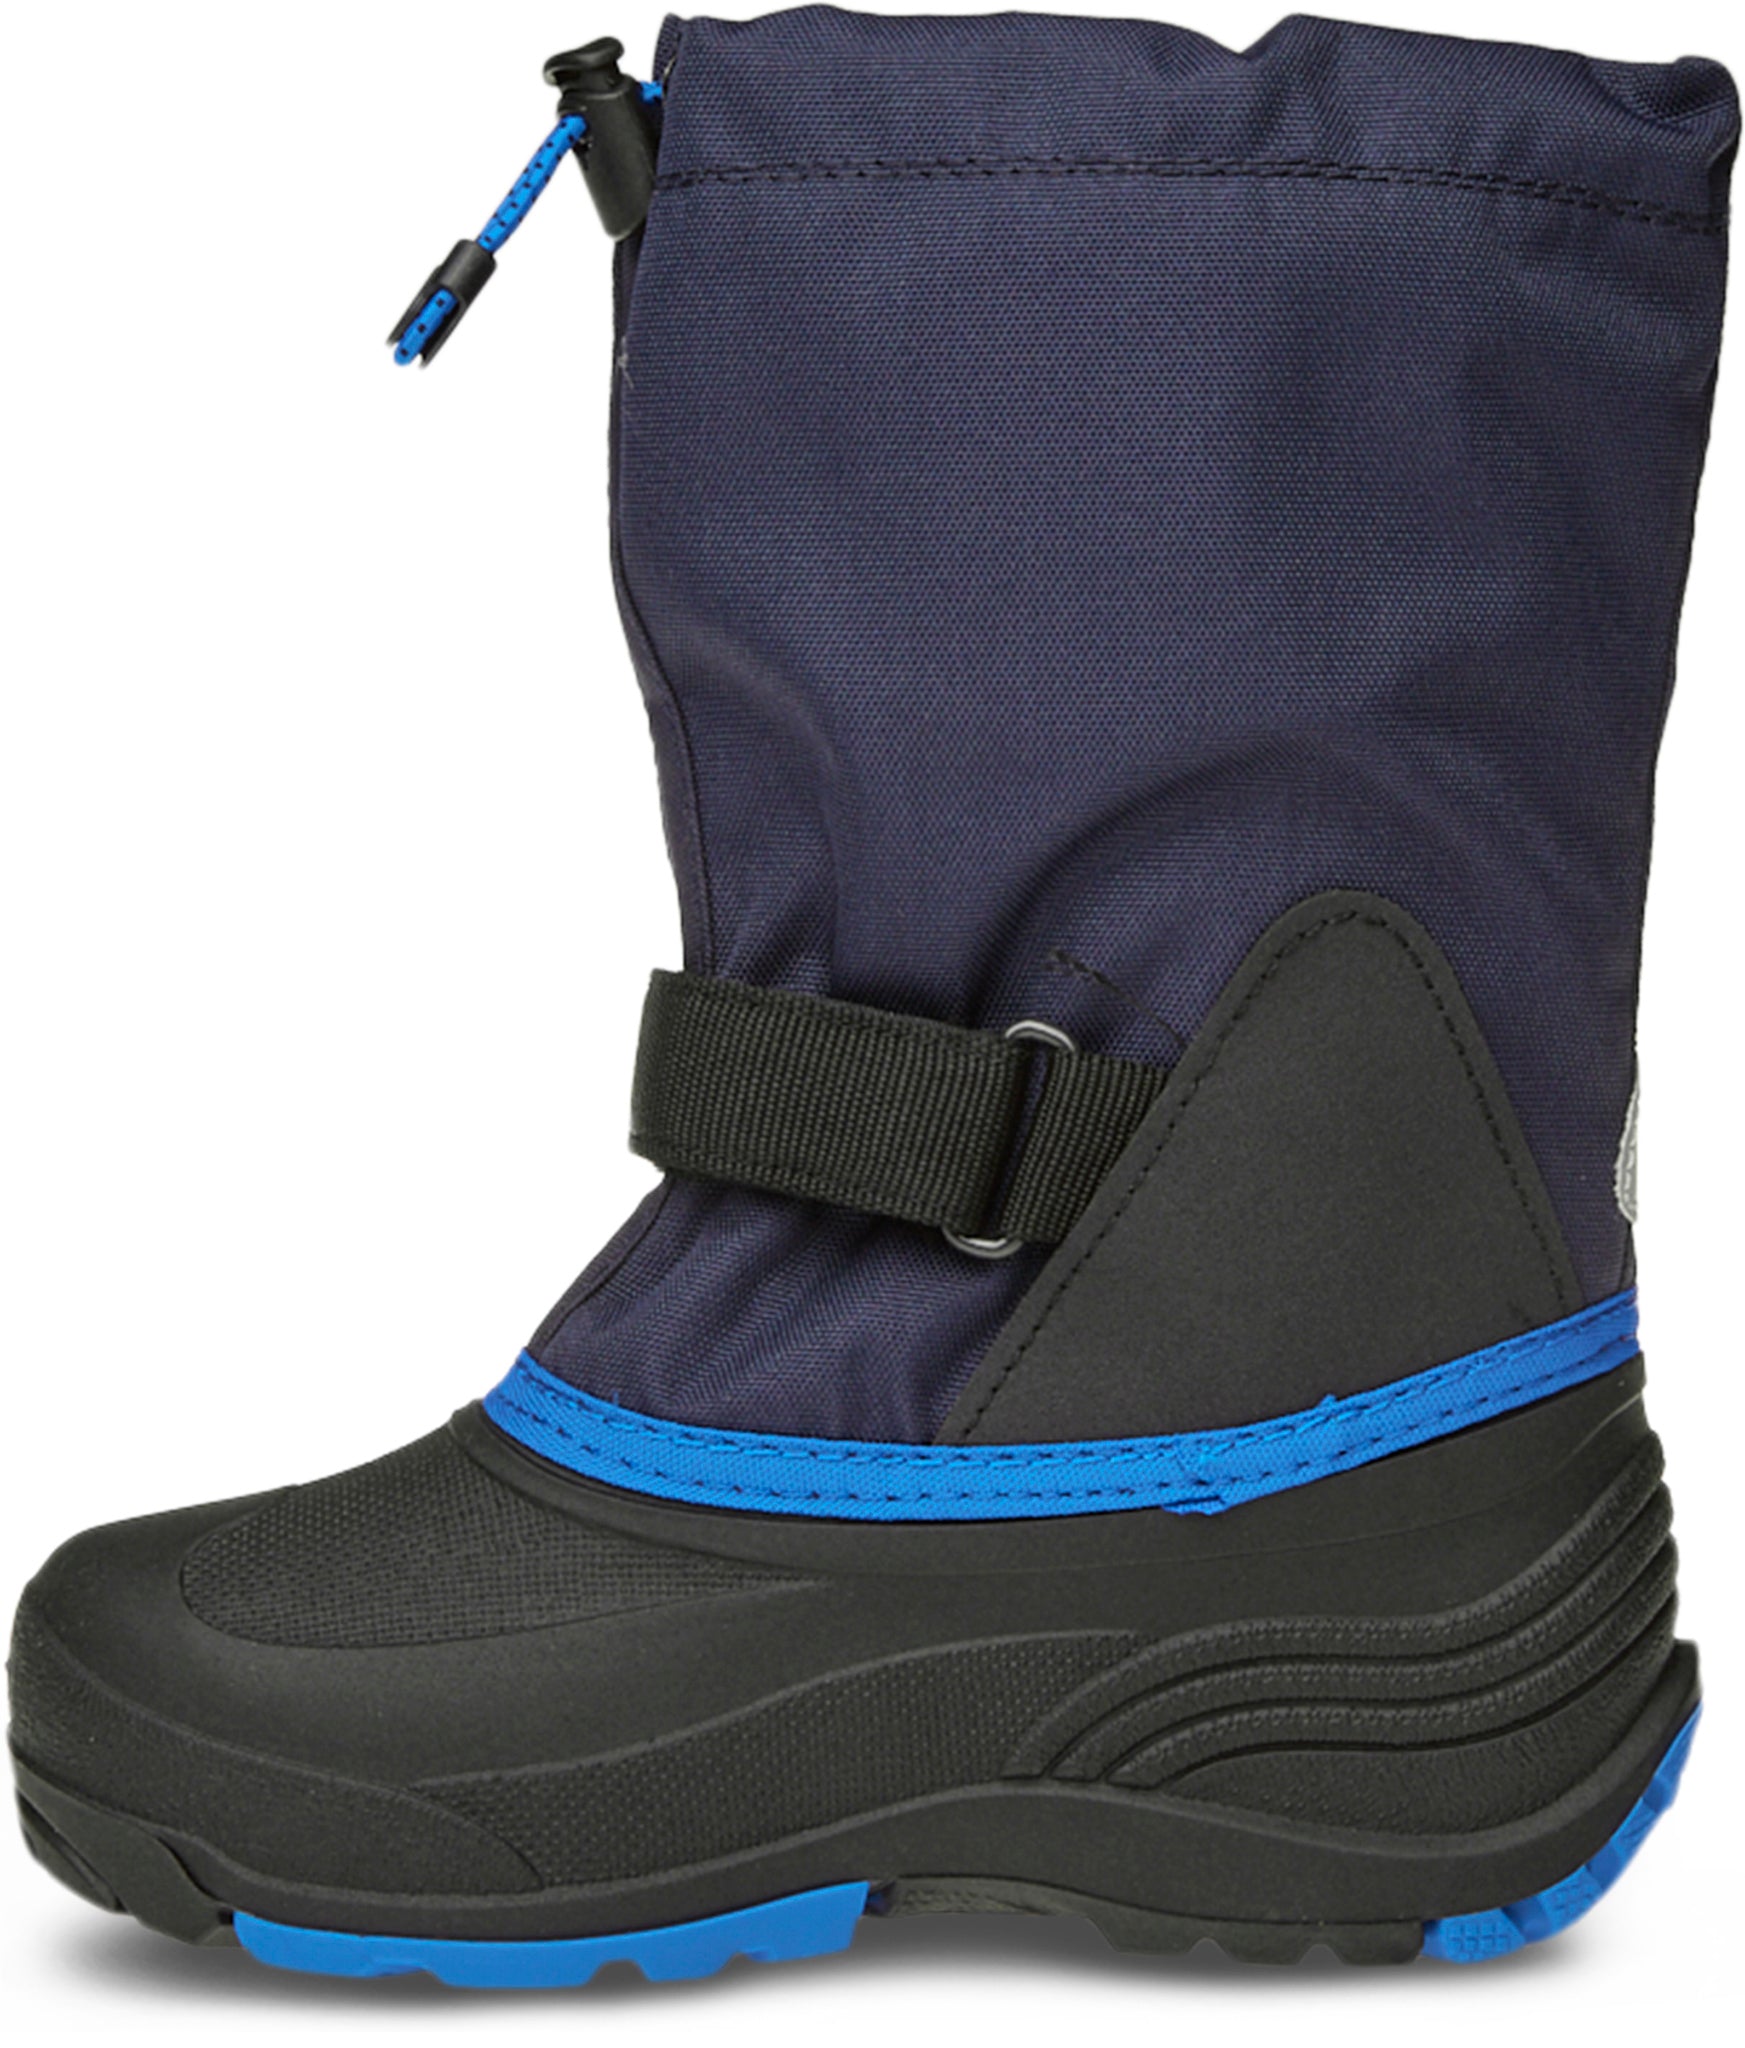 Kamik Waterbug 5 Winter Boots - Big Kid's | Altitude Sports